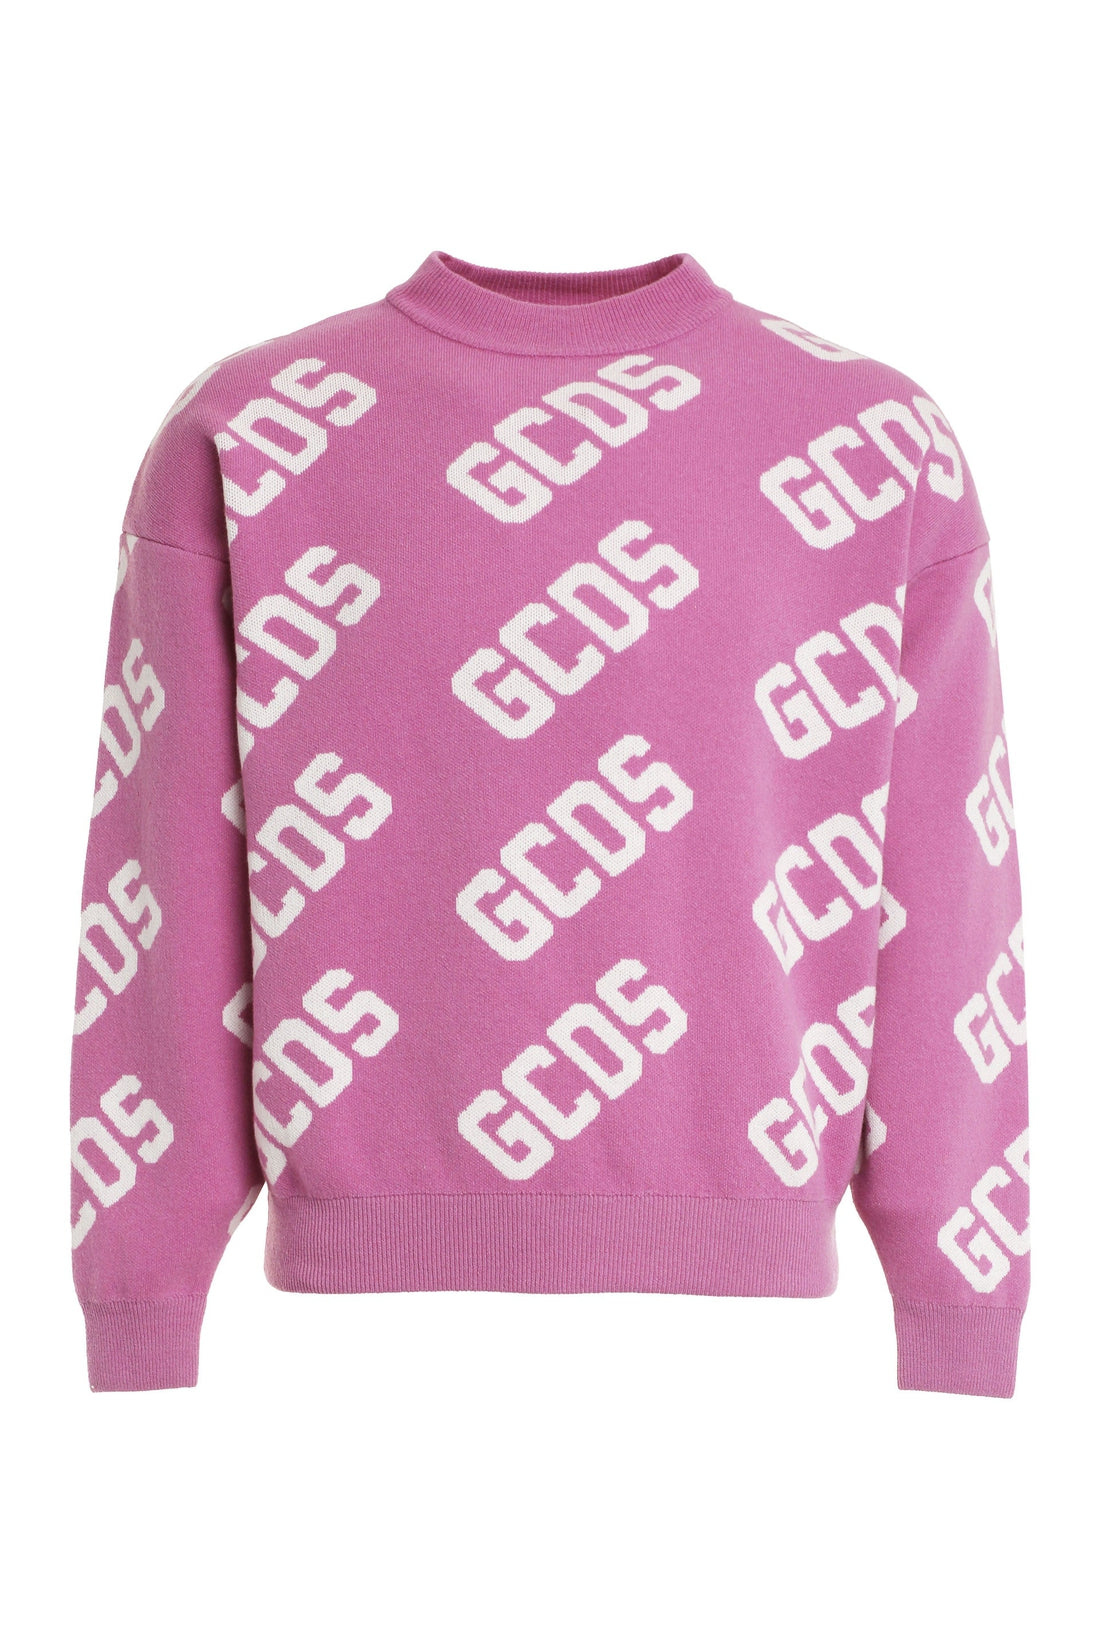 GCDS-OUTLET-SALE-Oversize wool-blend sweater-ARCHIVIST